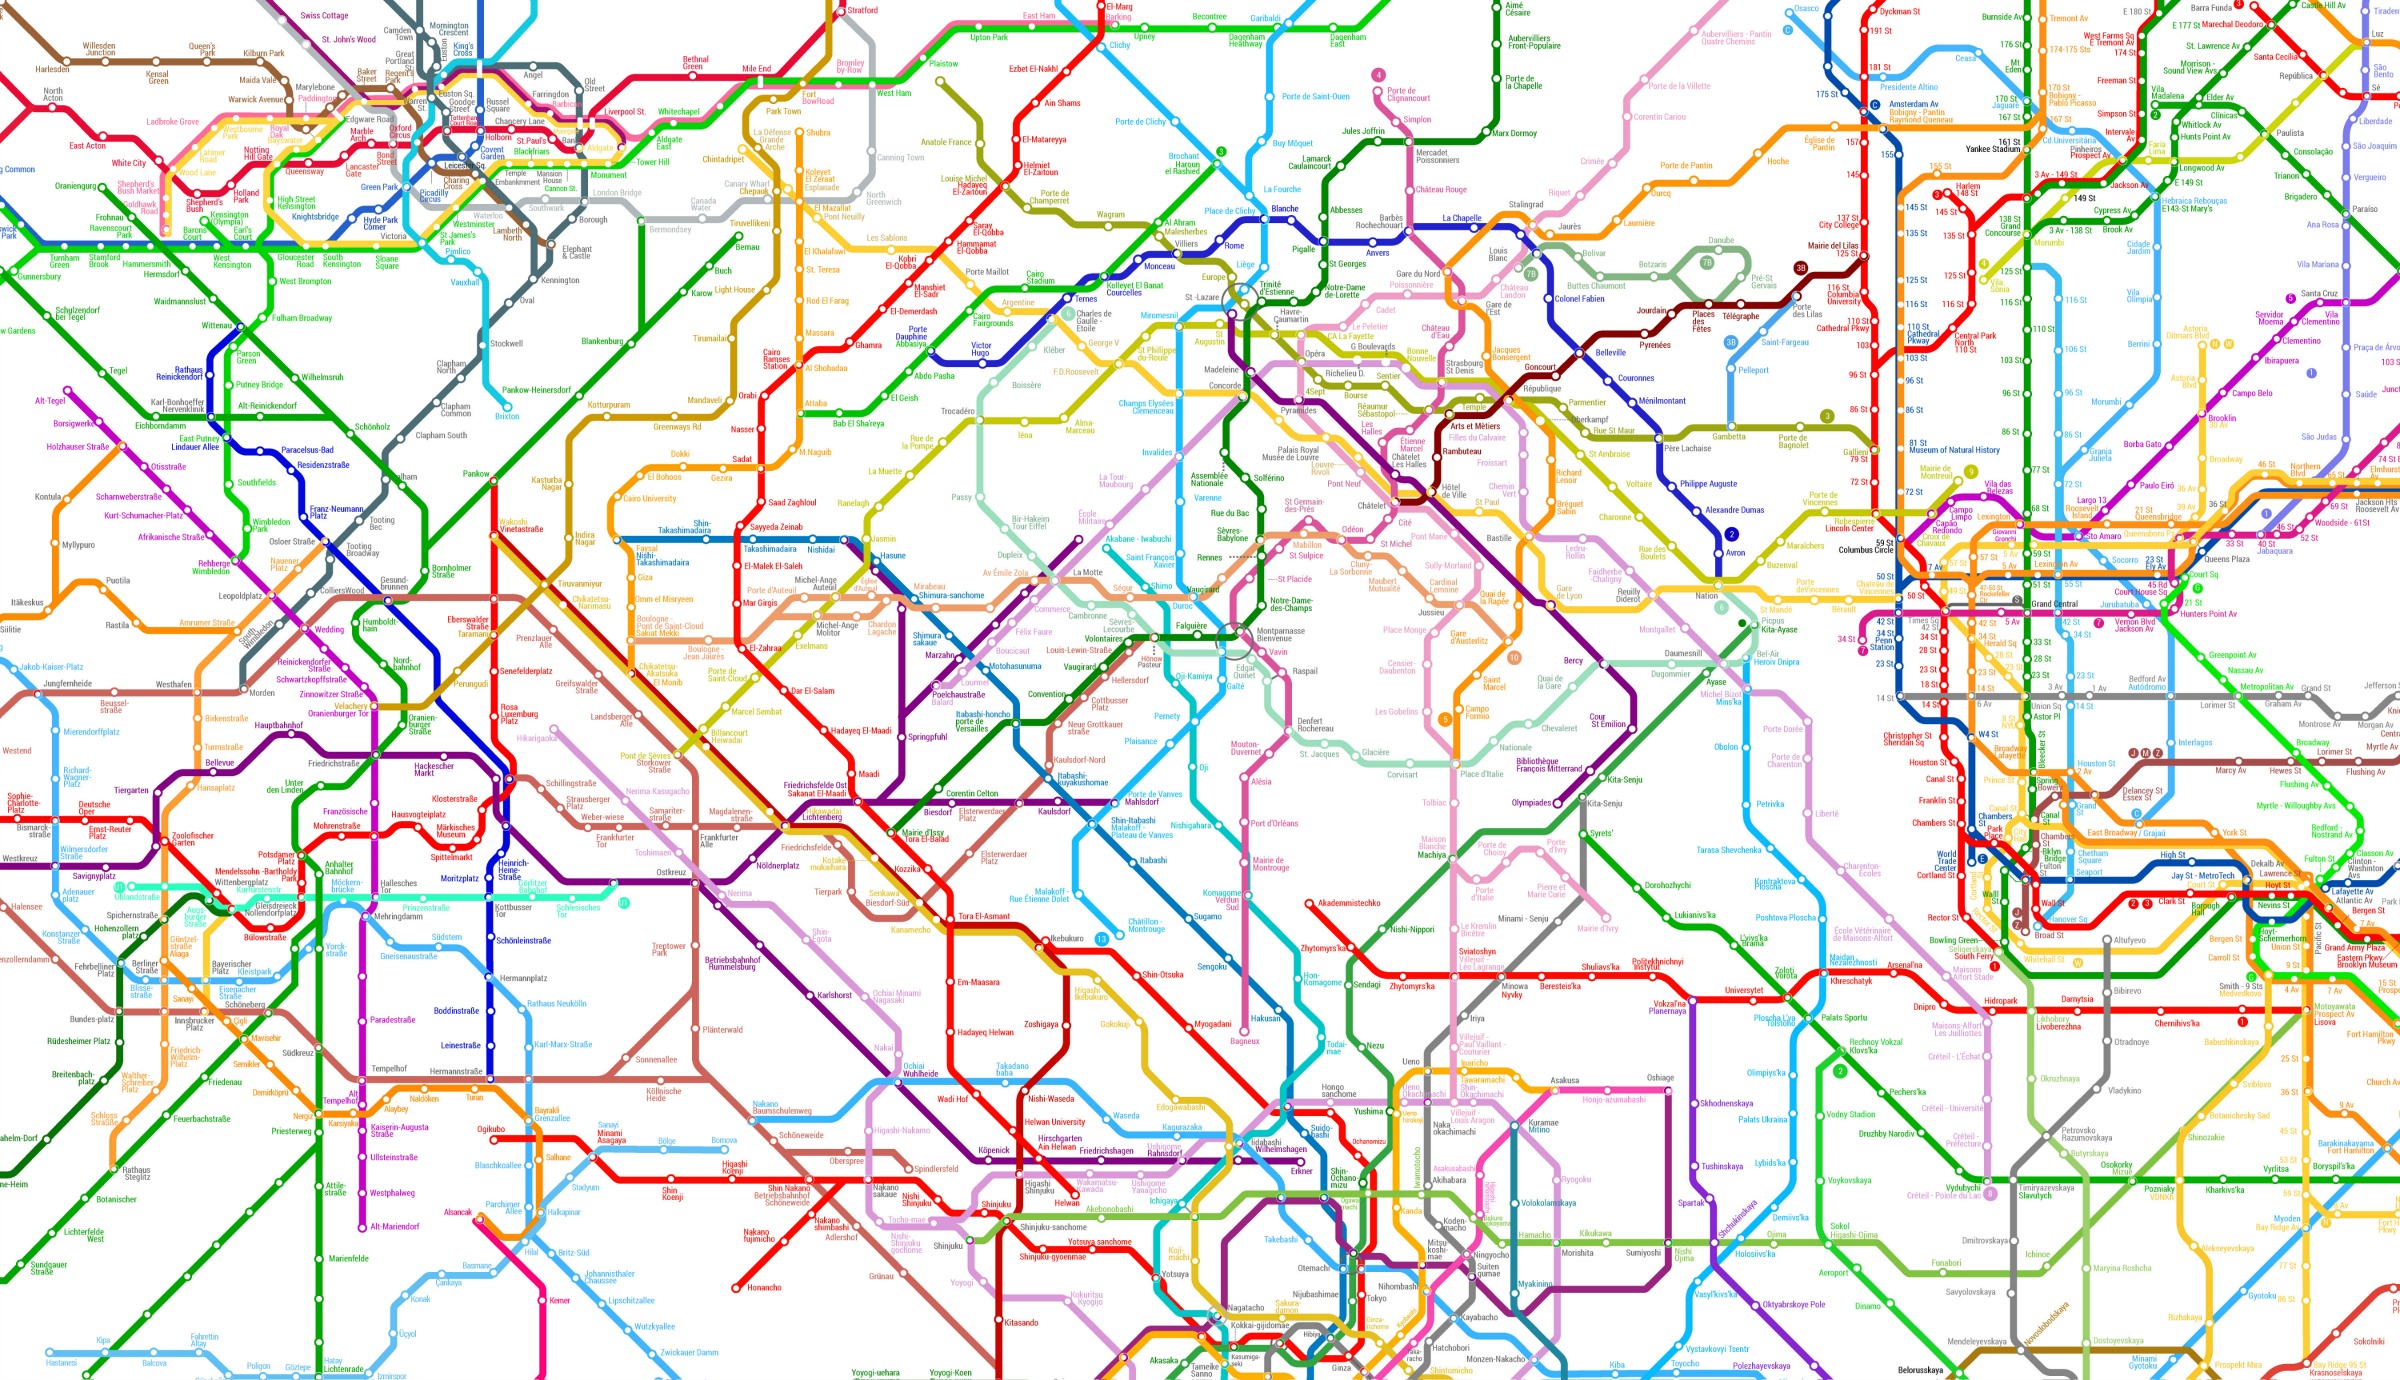 The World Metro Map